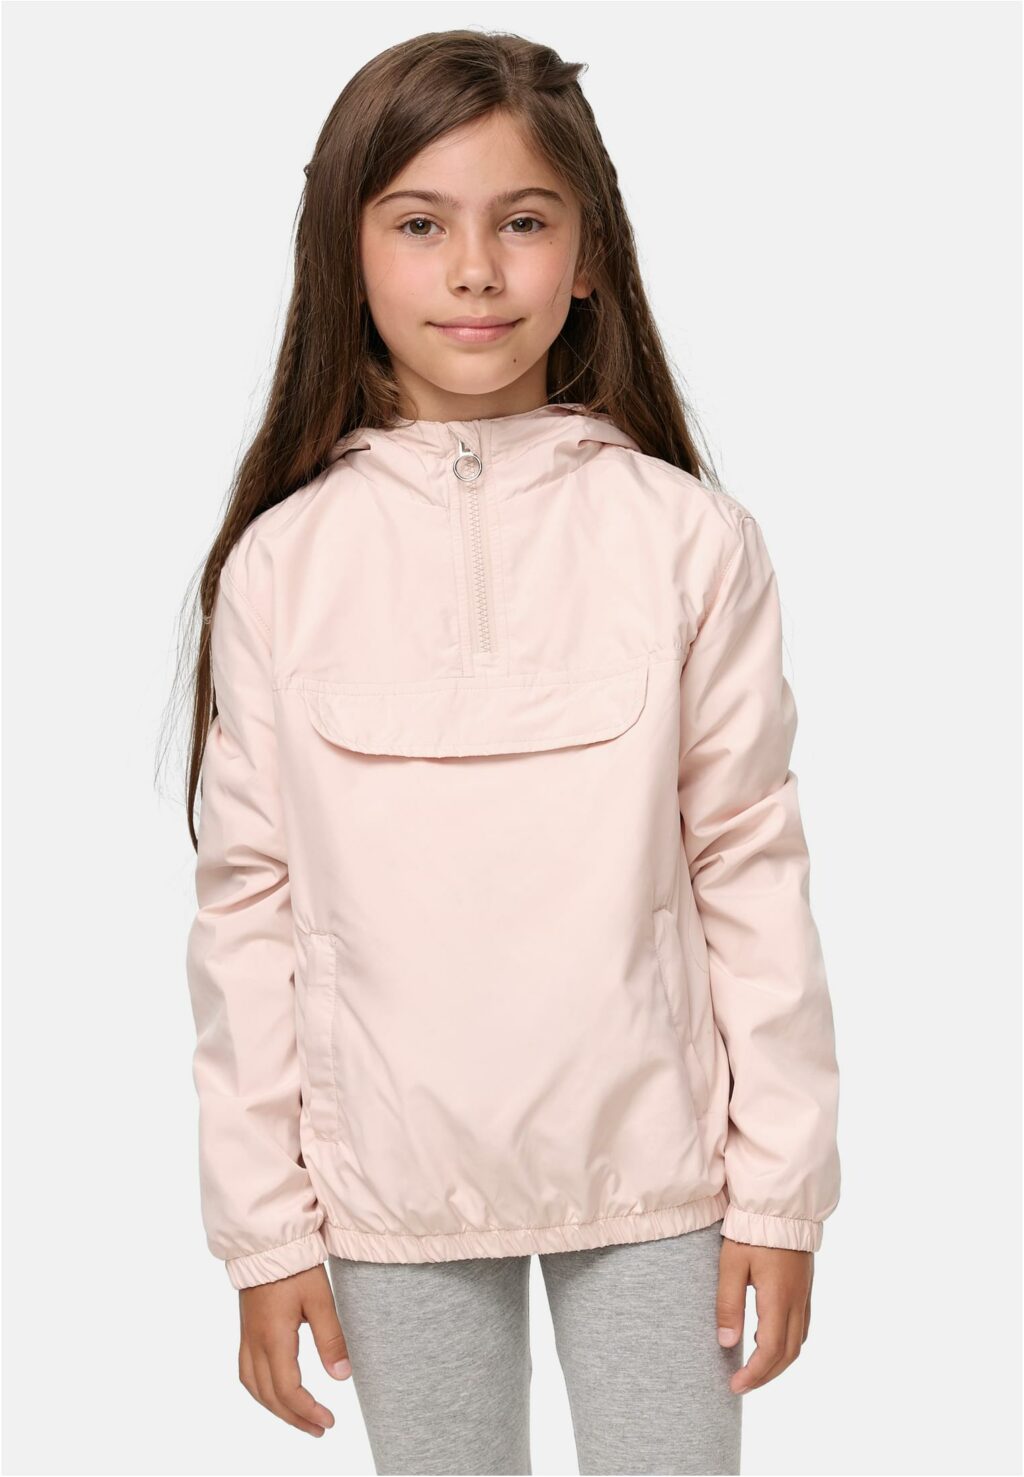 Girls Basic Pullover Jacket light pink UCK2013